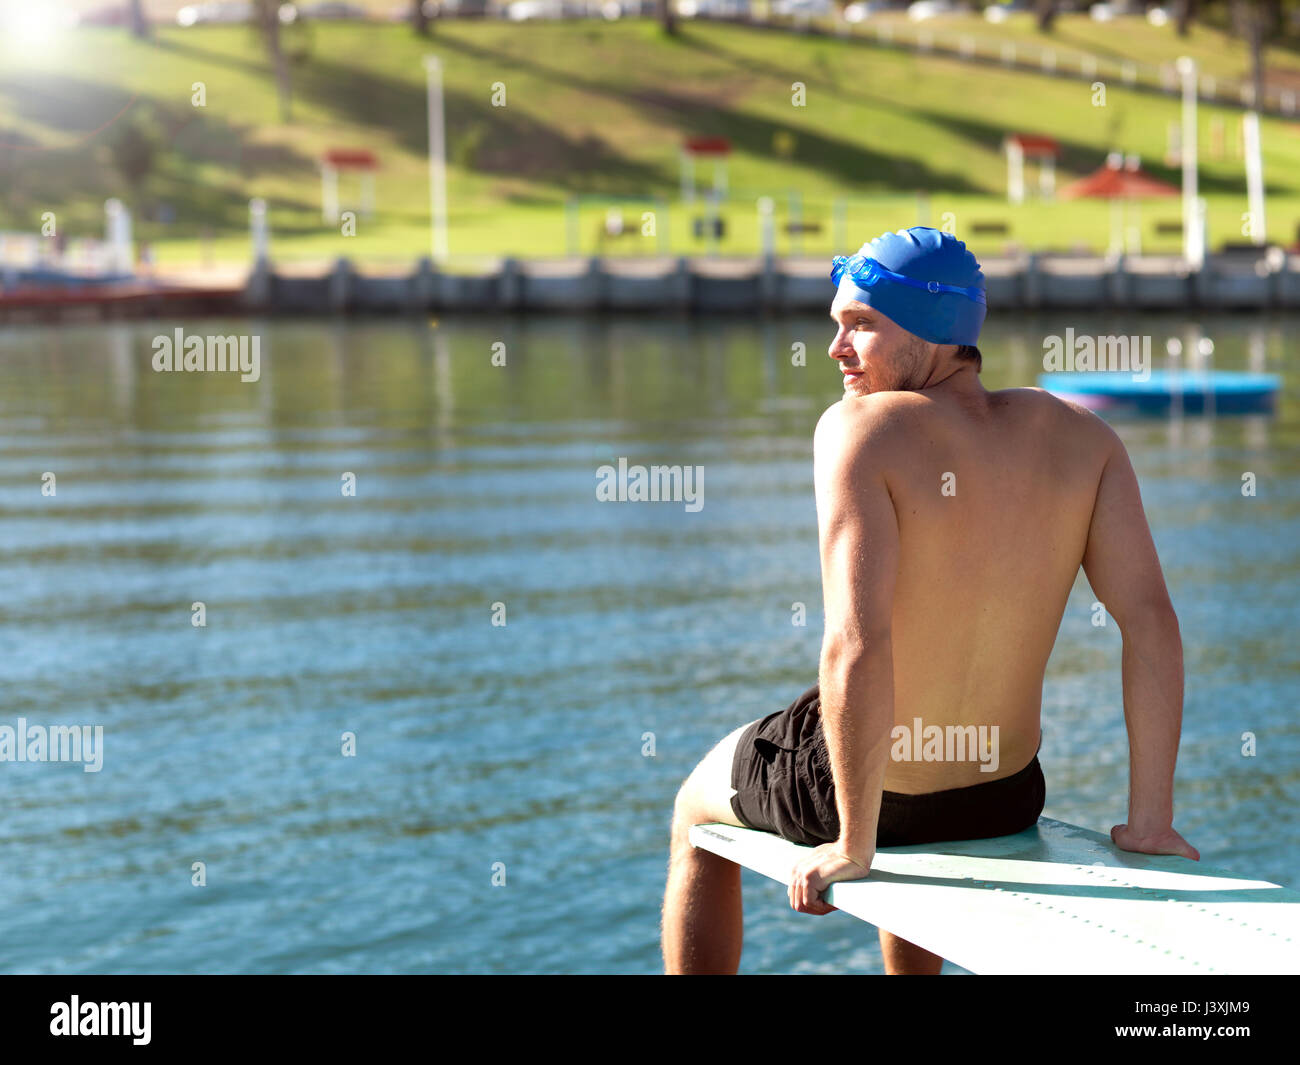 Diver on diving platform, Geelong, Victoria, Australia Stock Photo